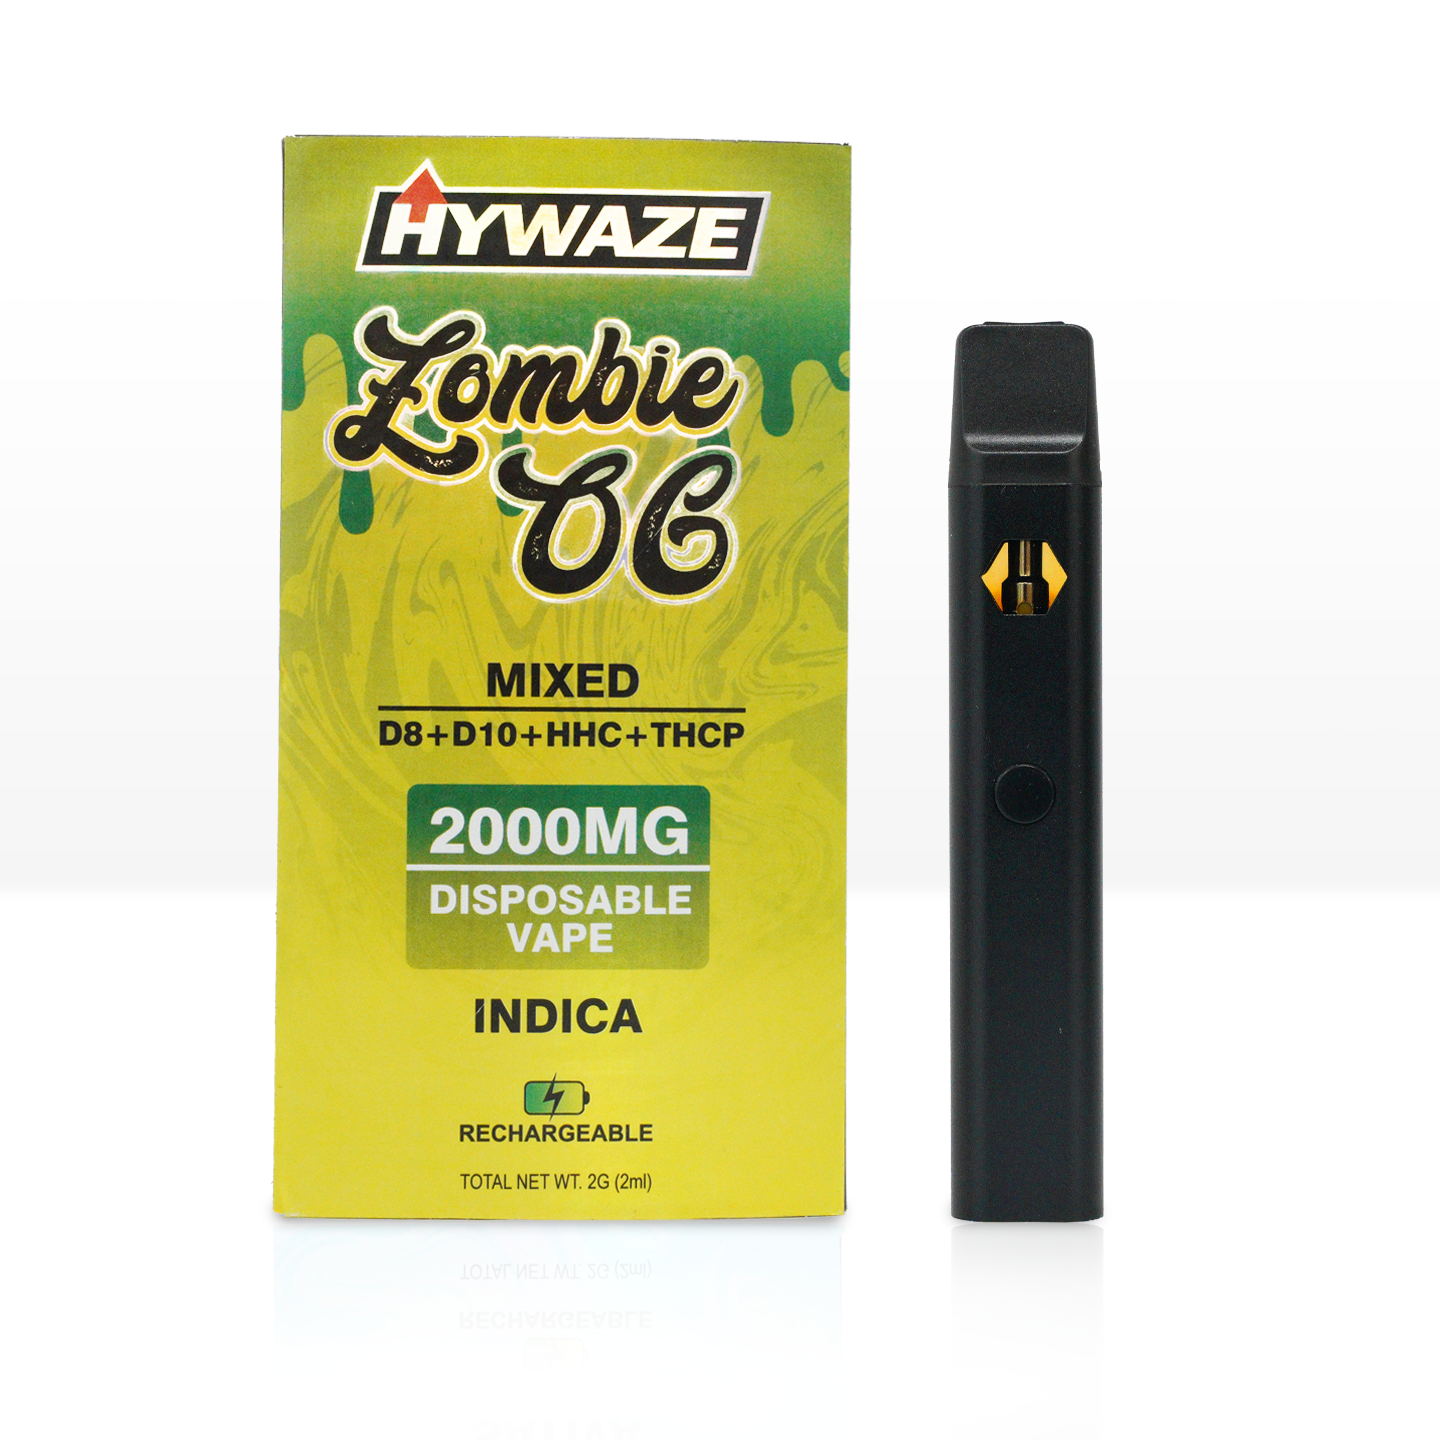 HYWAZE 2g Premium Mixed Disposables